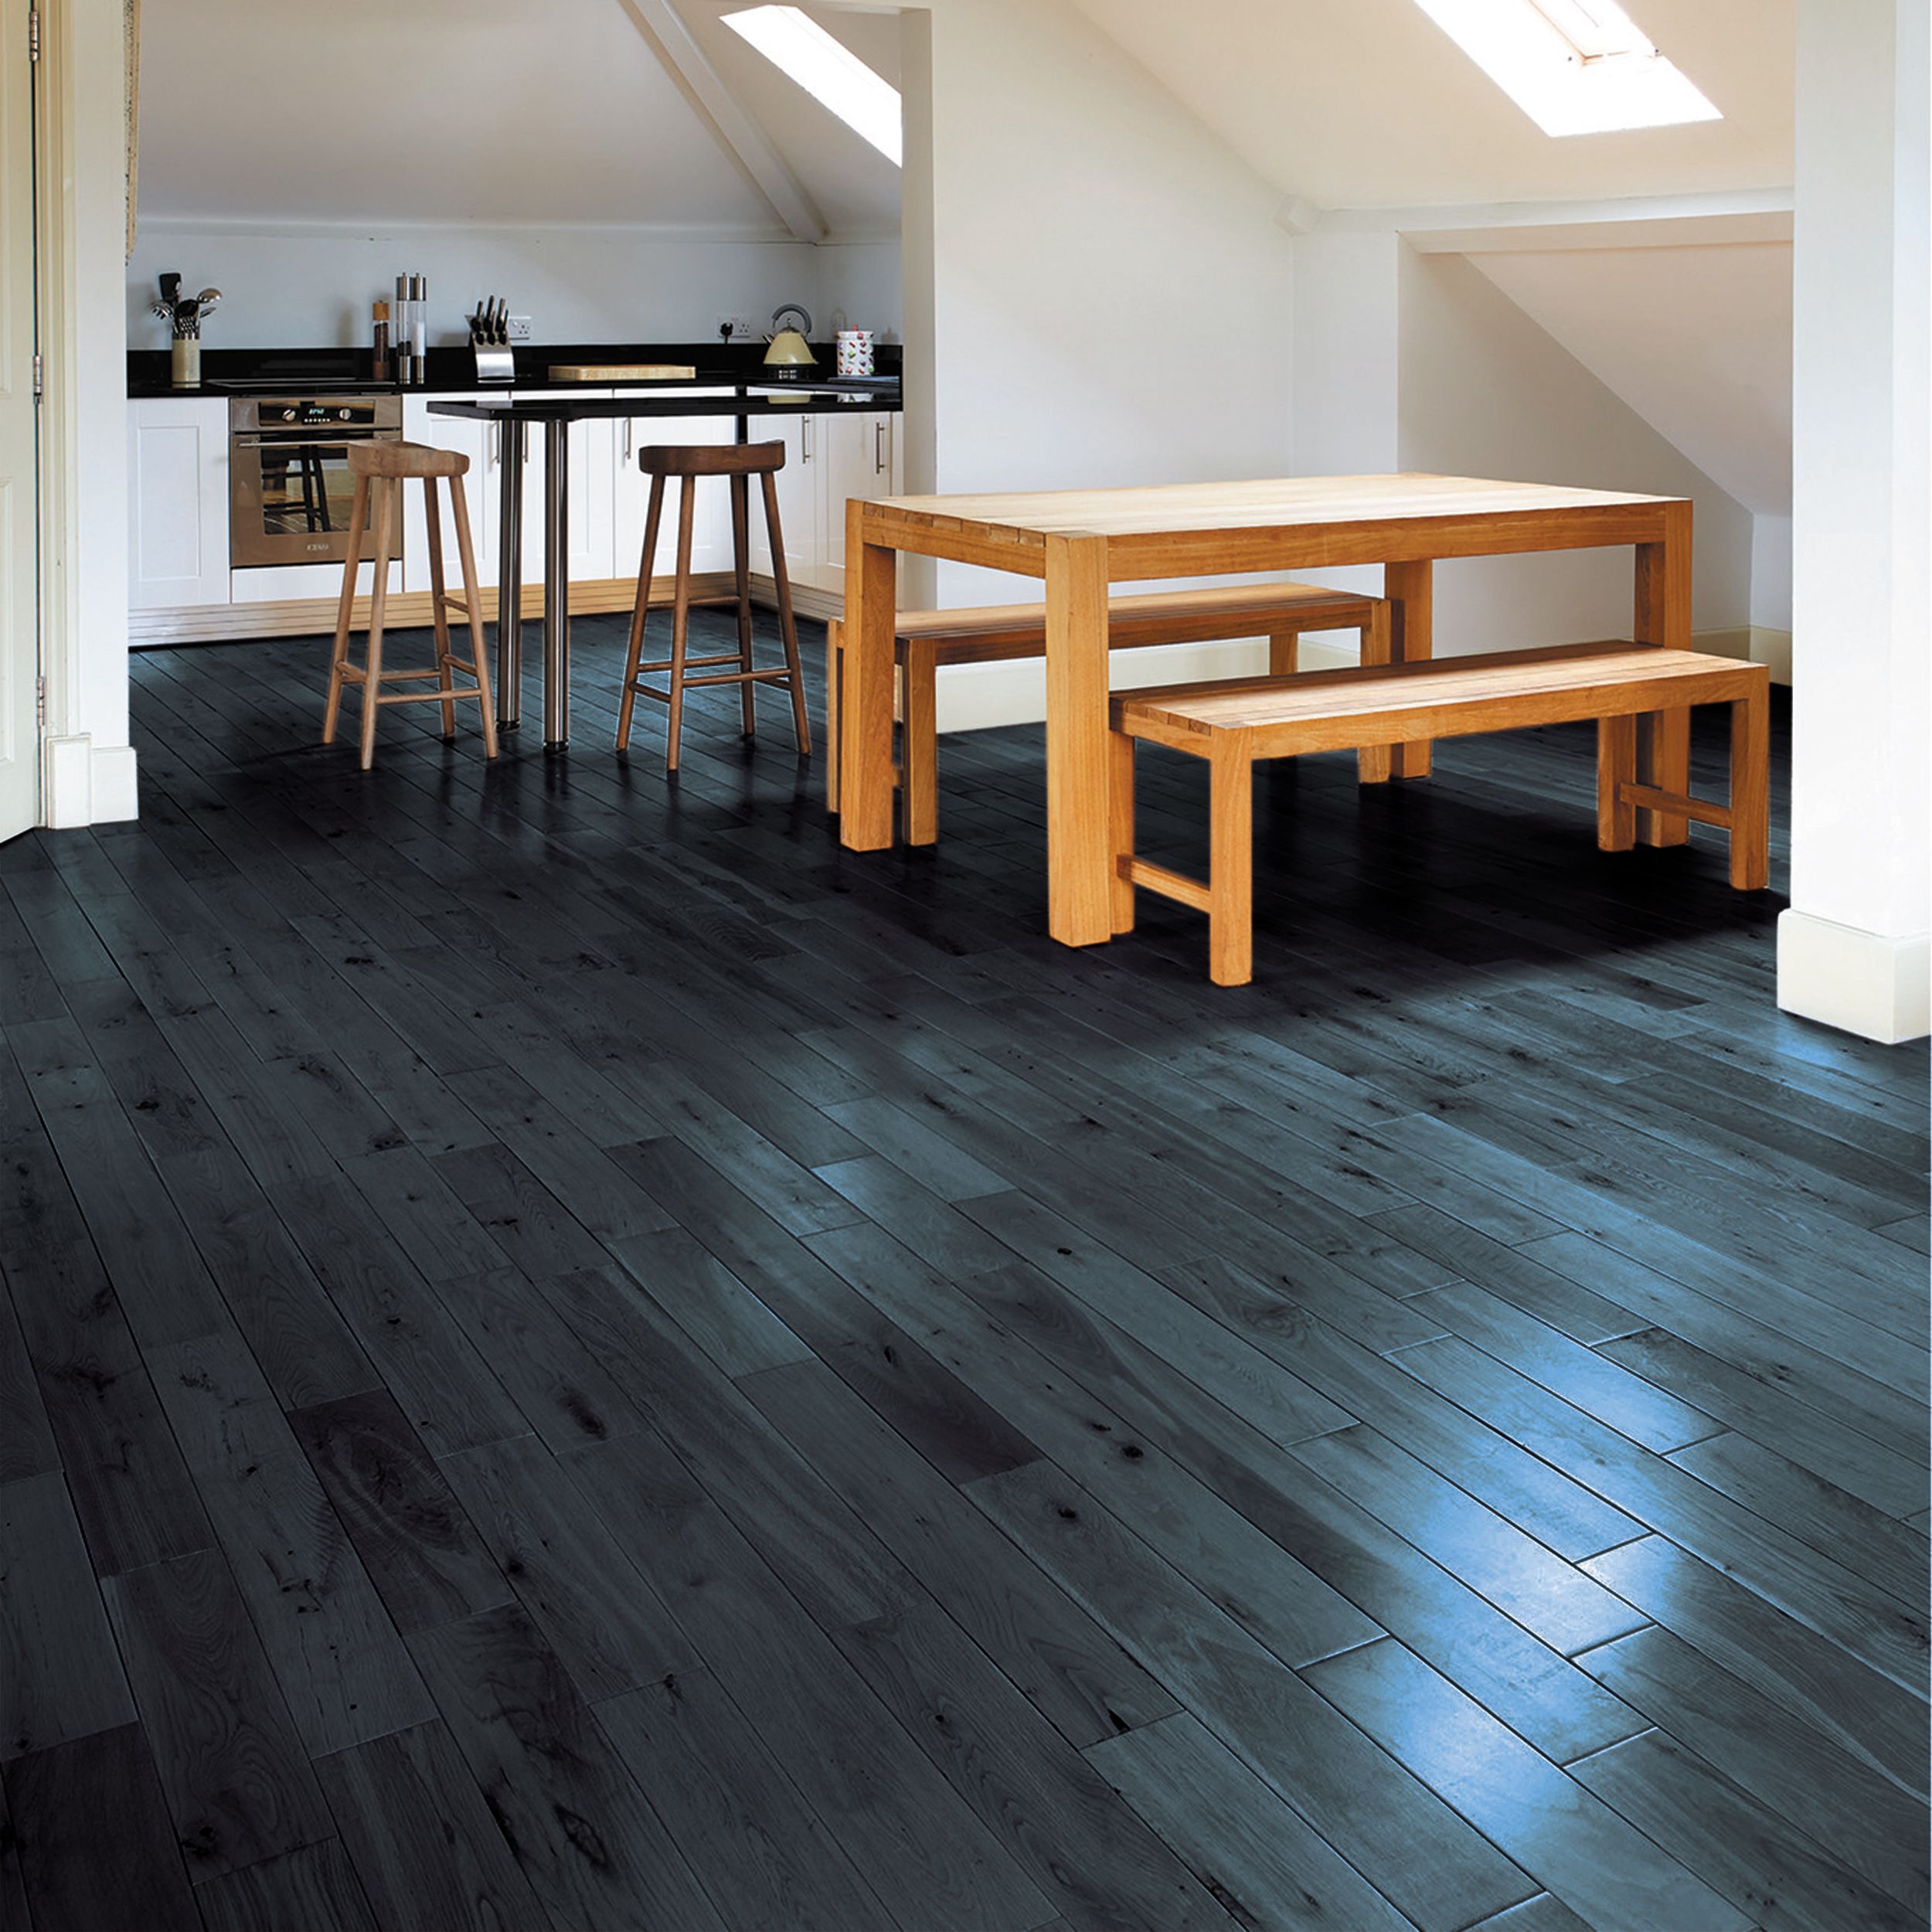 Ronseal Diamond Hard Floor Varnish Ebony Satin Wood Floor Varnish, 2.5L